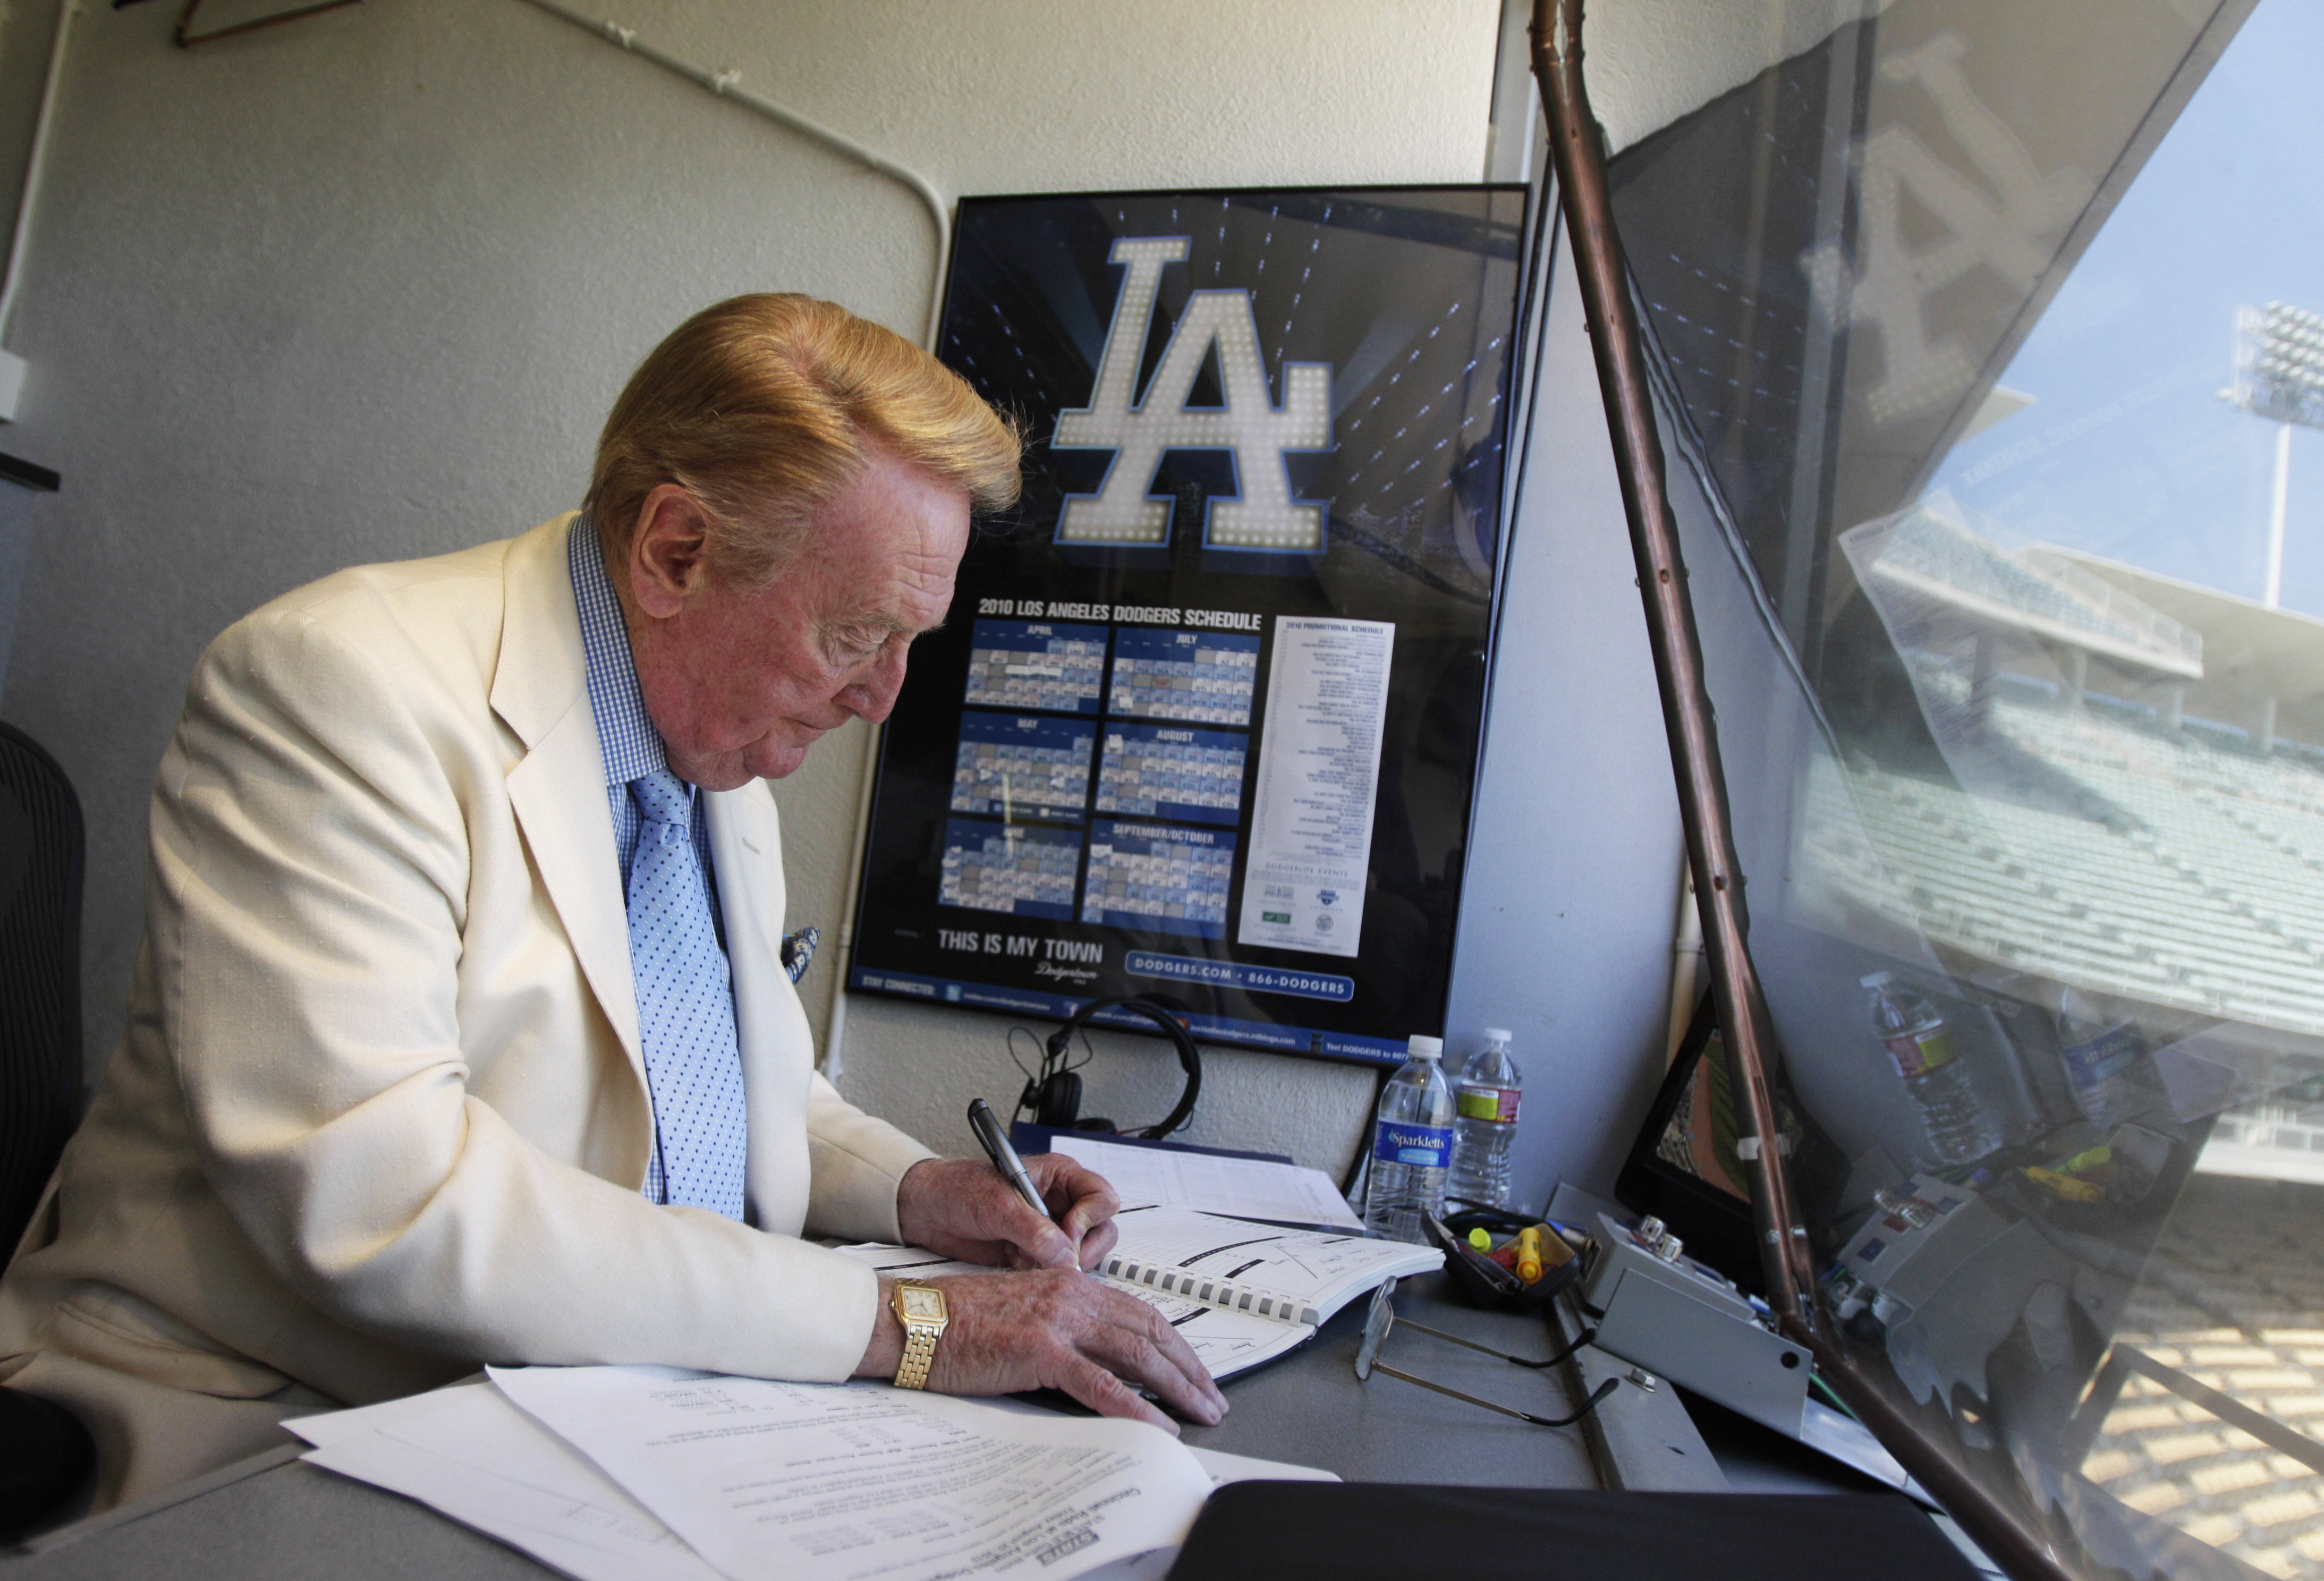 LA Dodgers Promotional Jersey - Vin Scully